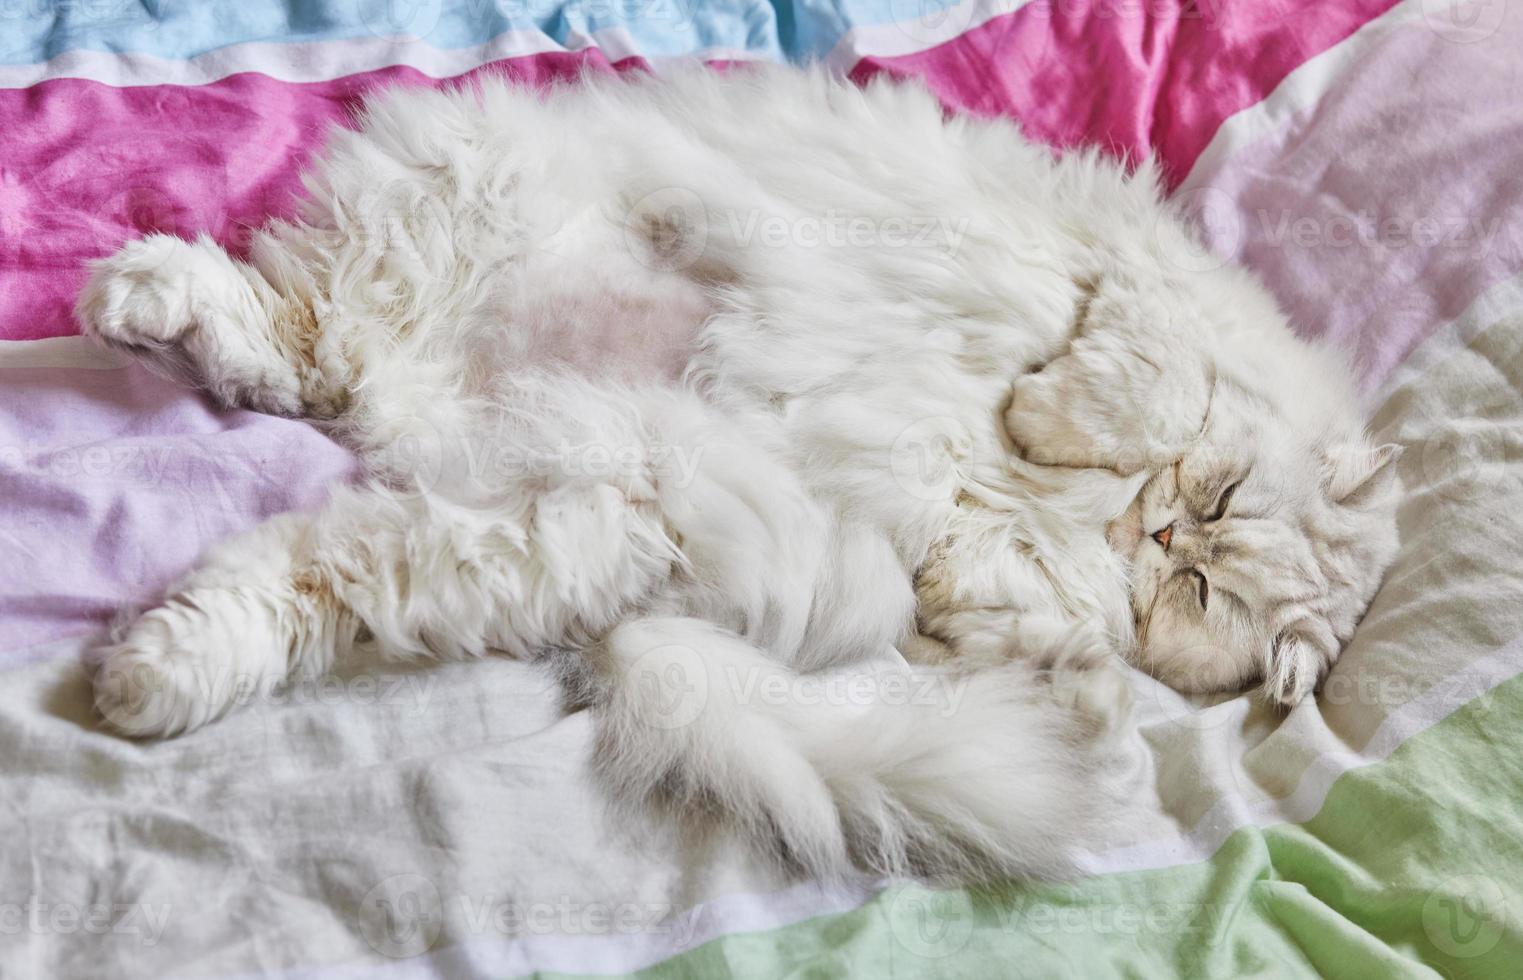 gato blanco británico de pelo largo yace boca arriba en la cama foto